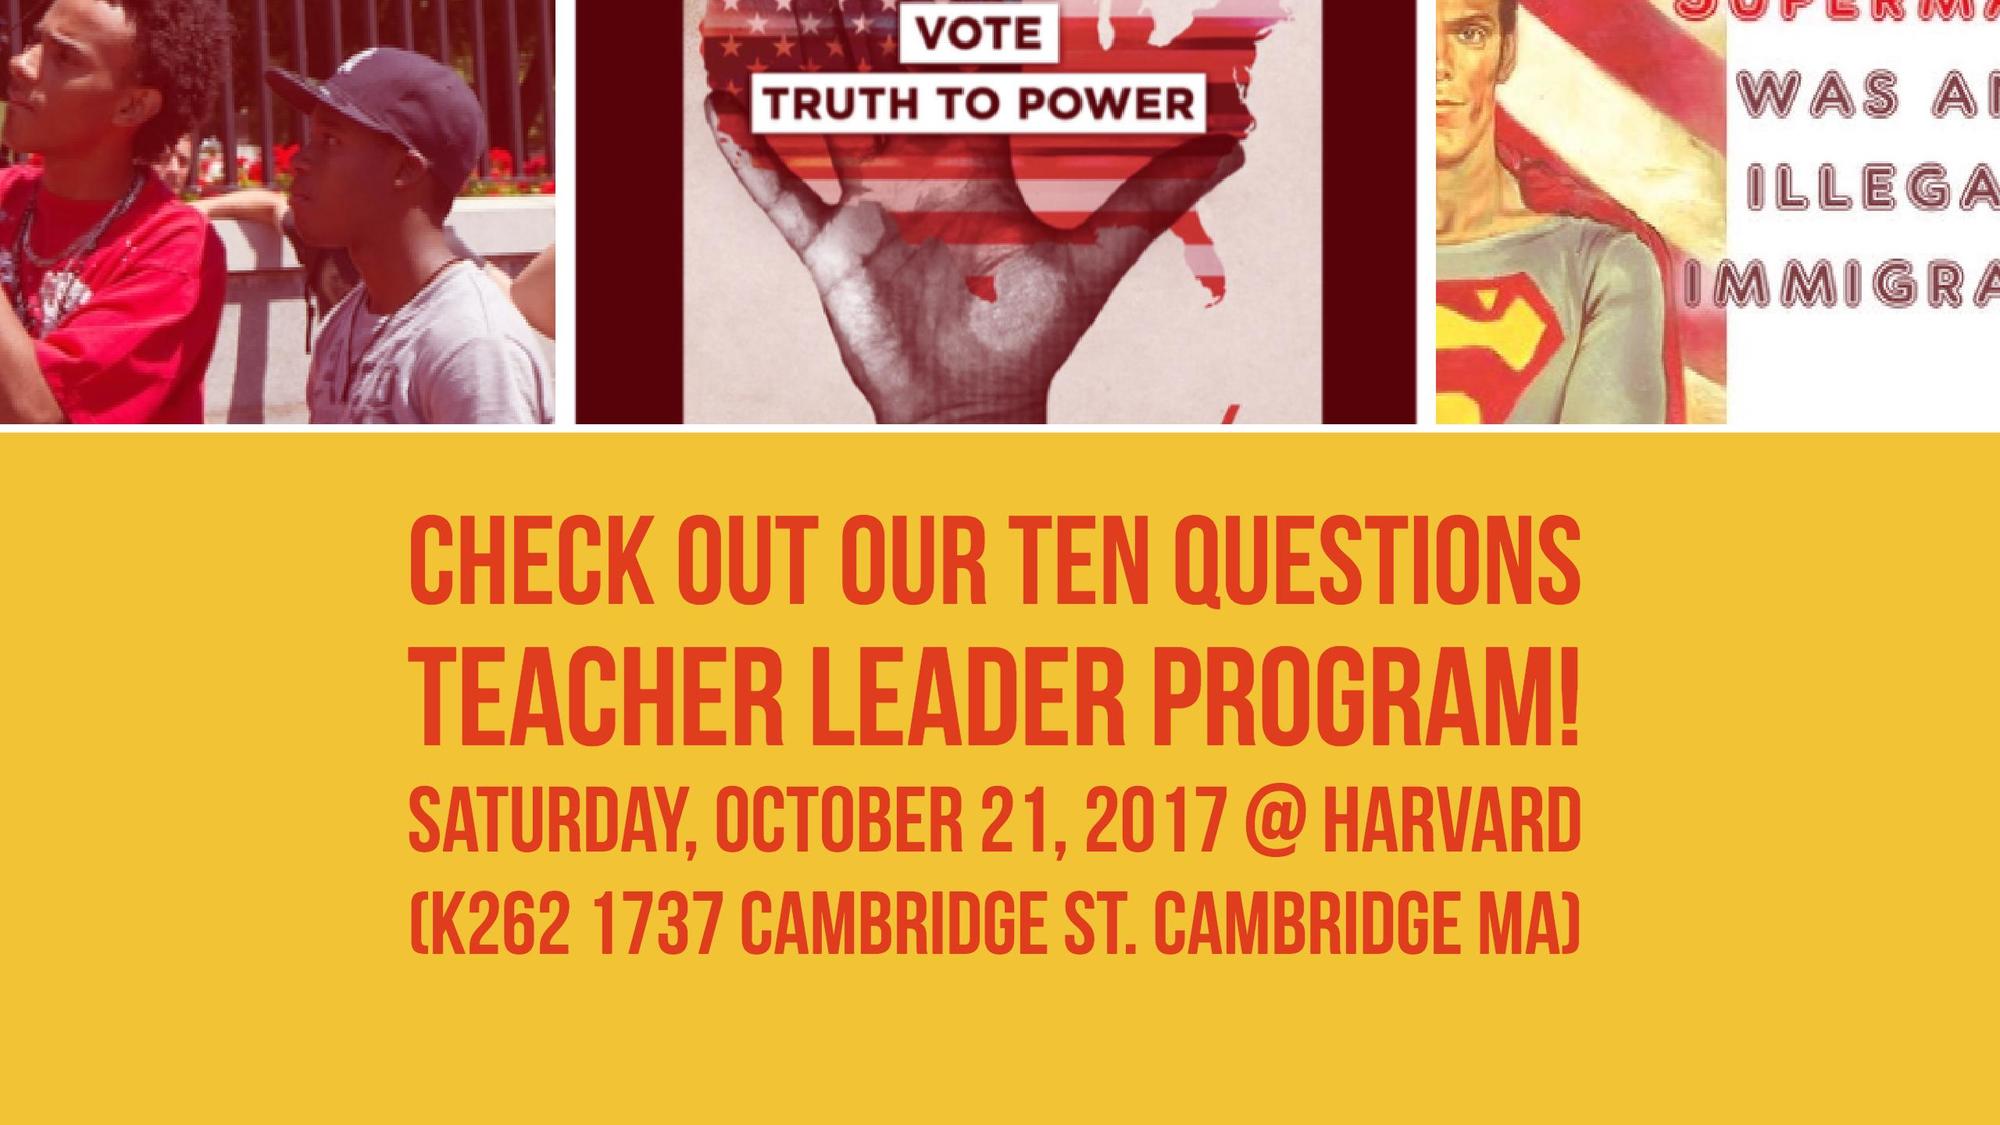 Teacher Leader Meeting on Saturday, Oct 21 2017